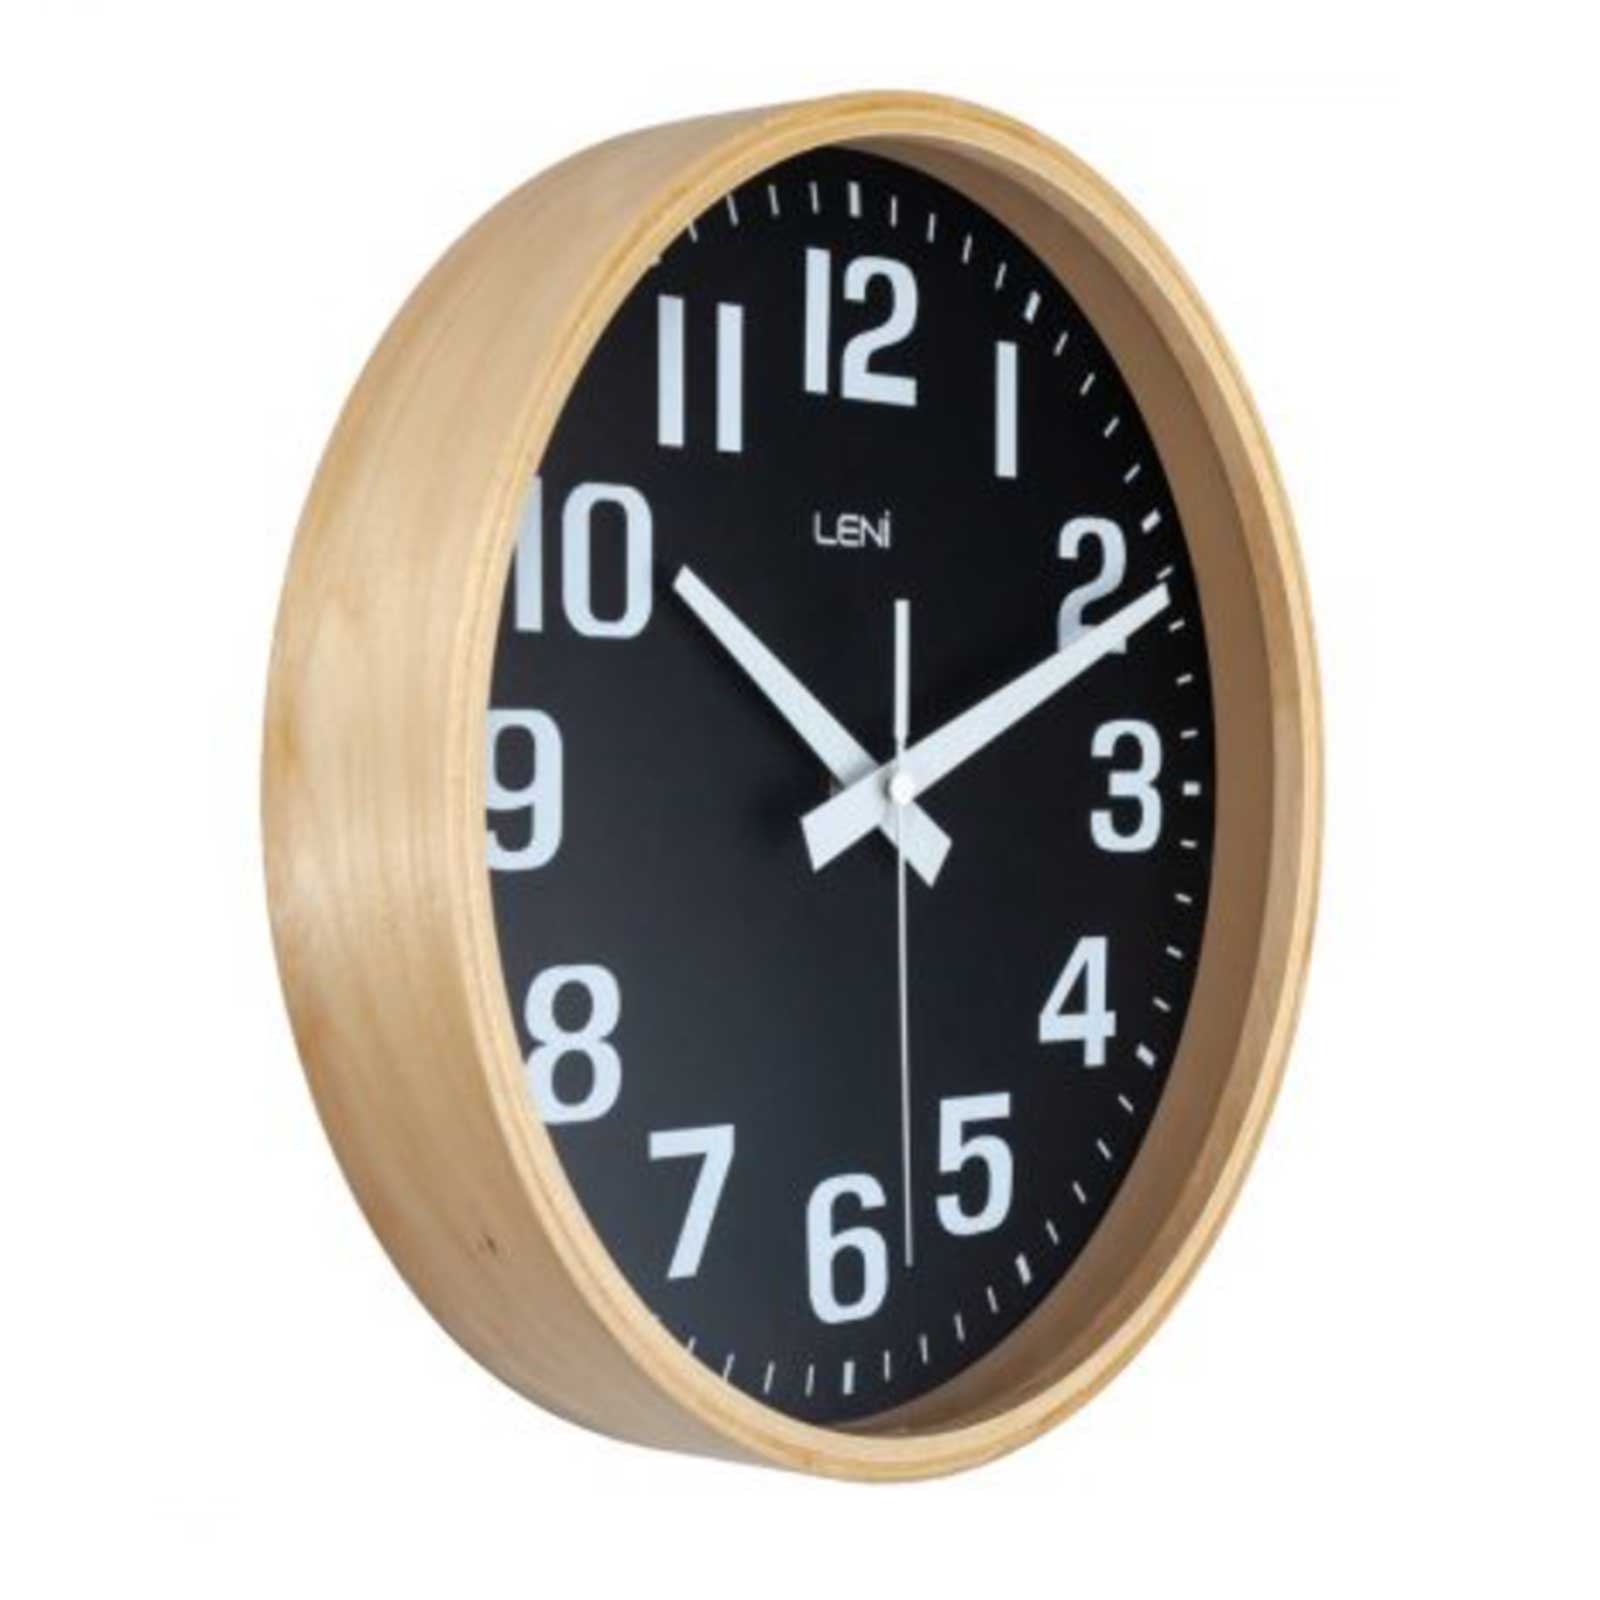 40cm Black Leni Silent Wood Wall Clock